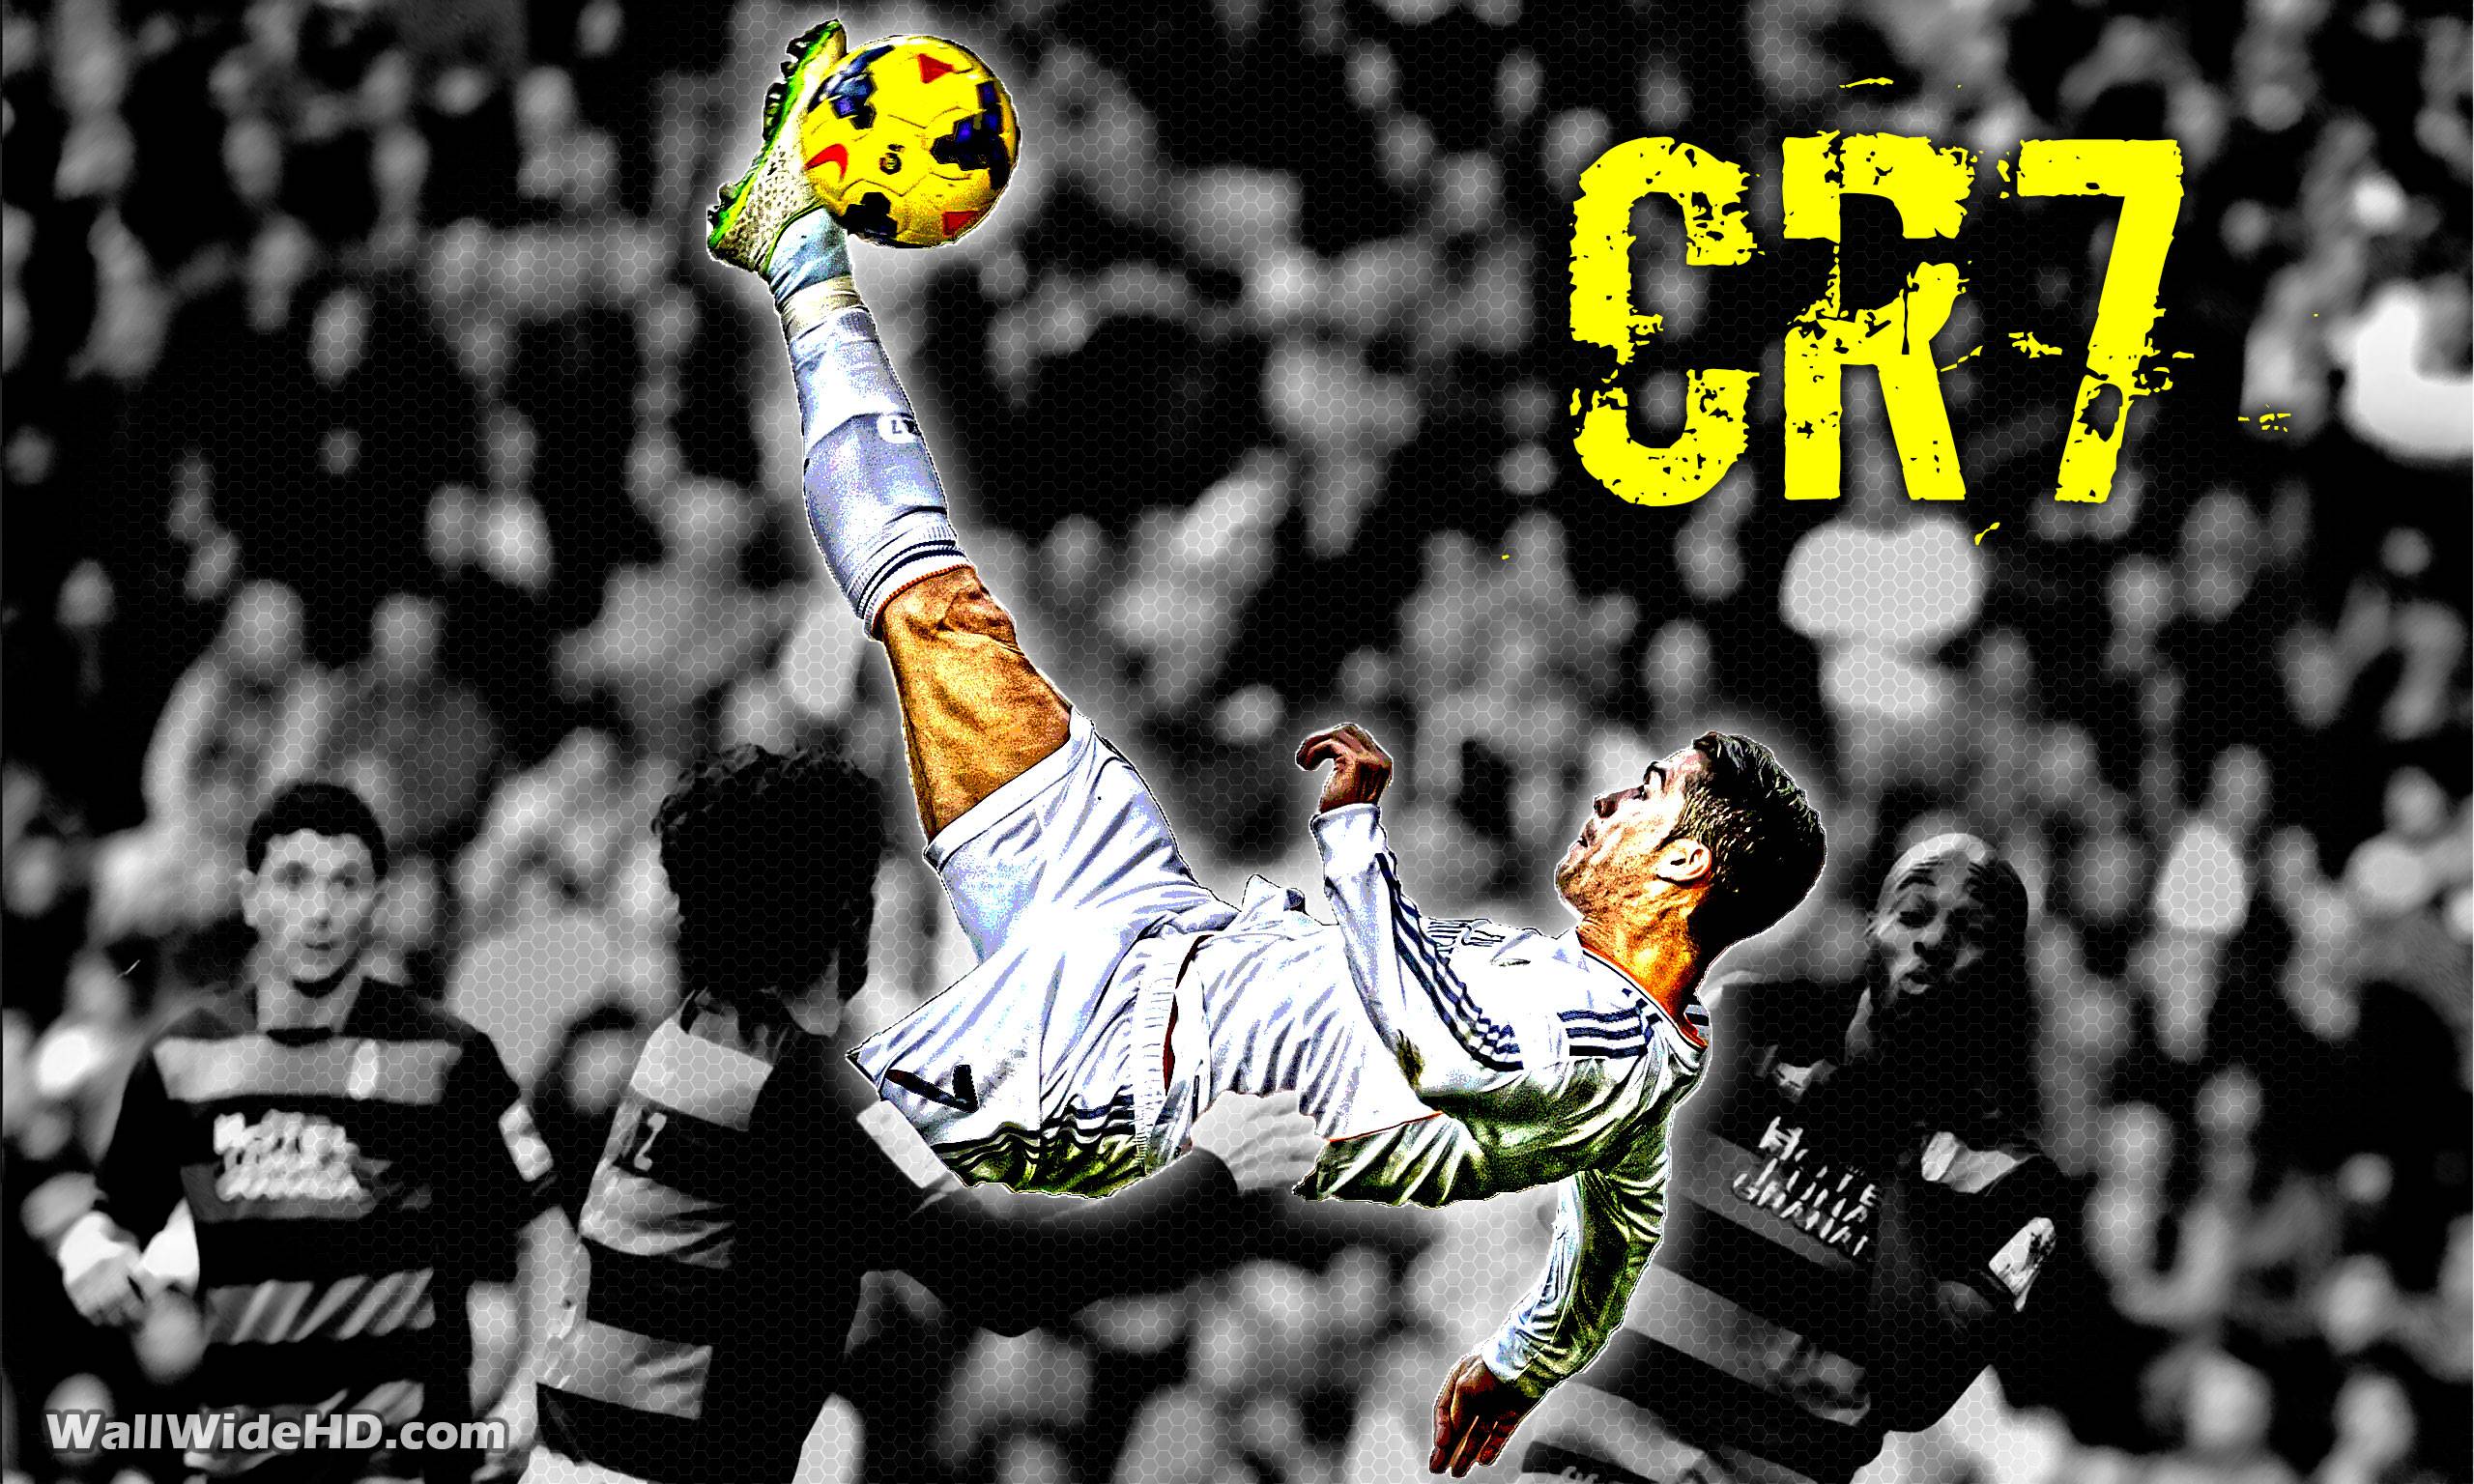 Cristiano Ronaldo 7 Wallpapers 2015